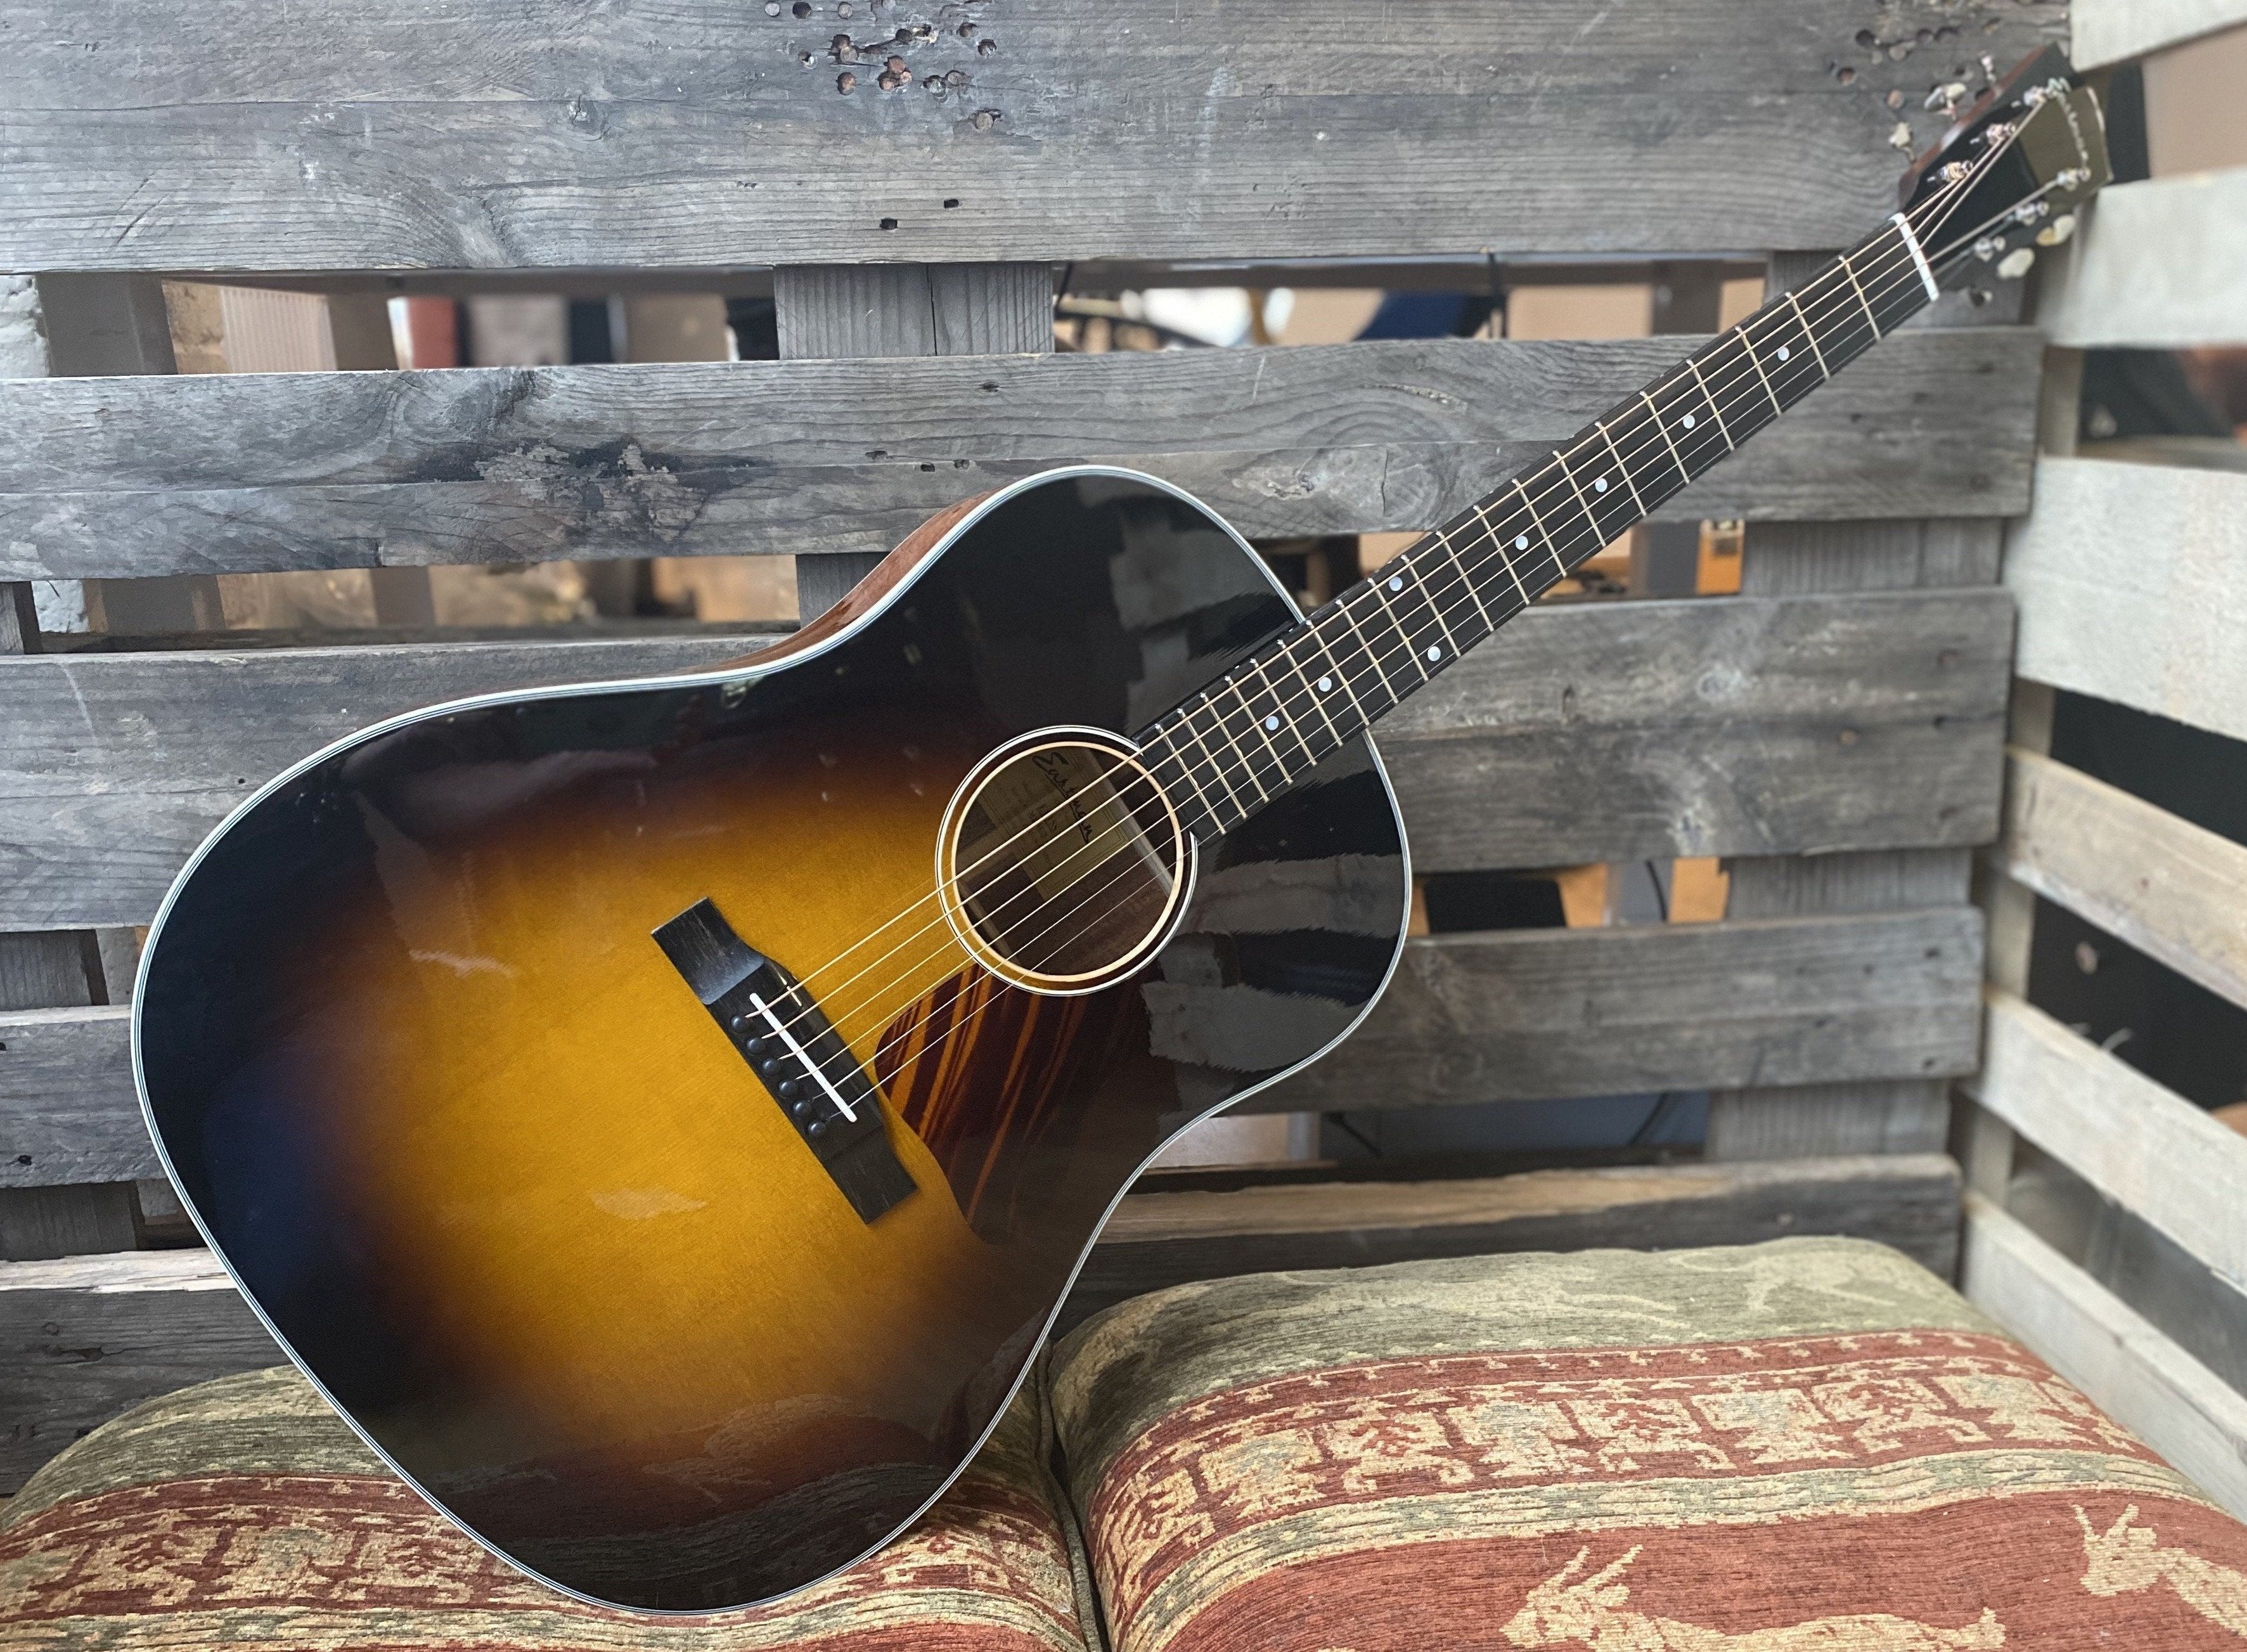 Eastman E10 SS TC  Left Handed, Acoustic Guitar for sale at Richards Guitars.